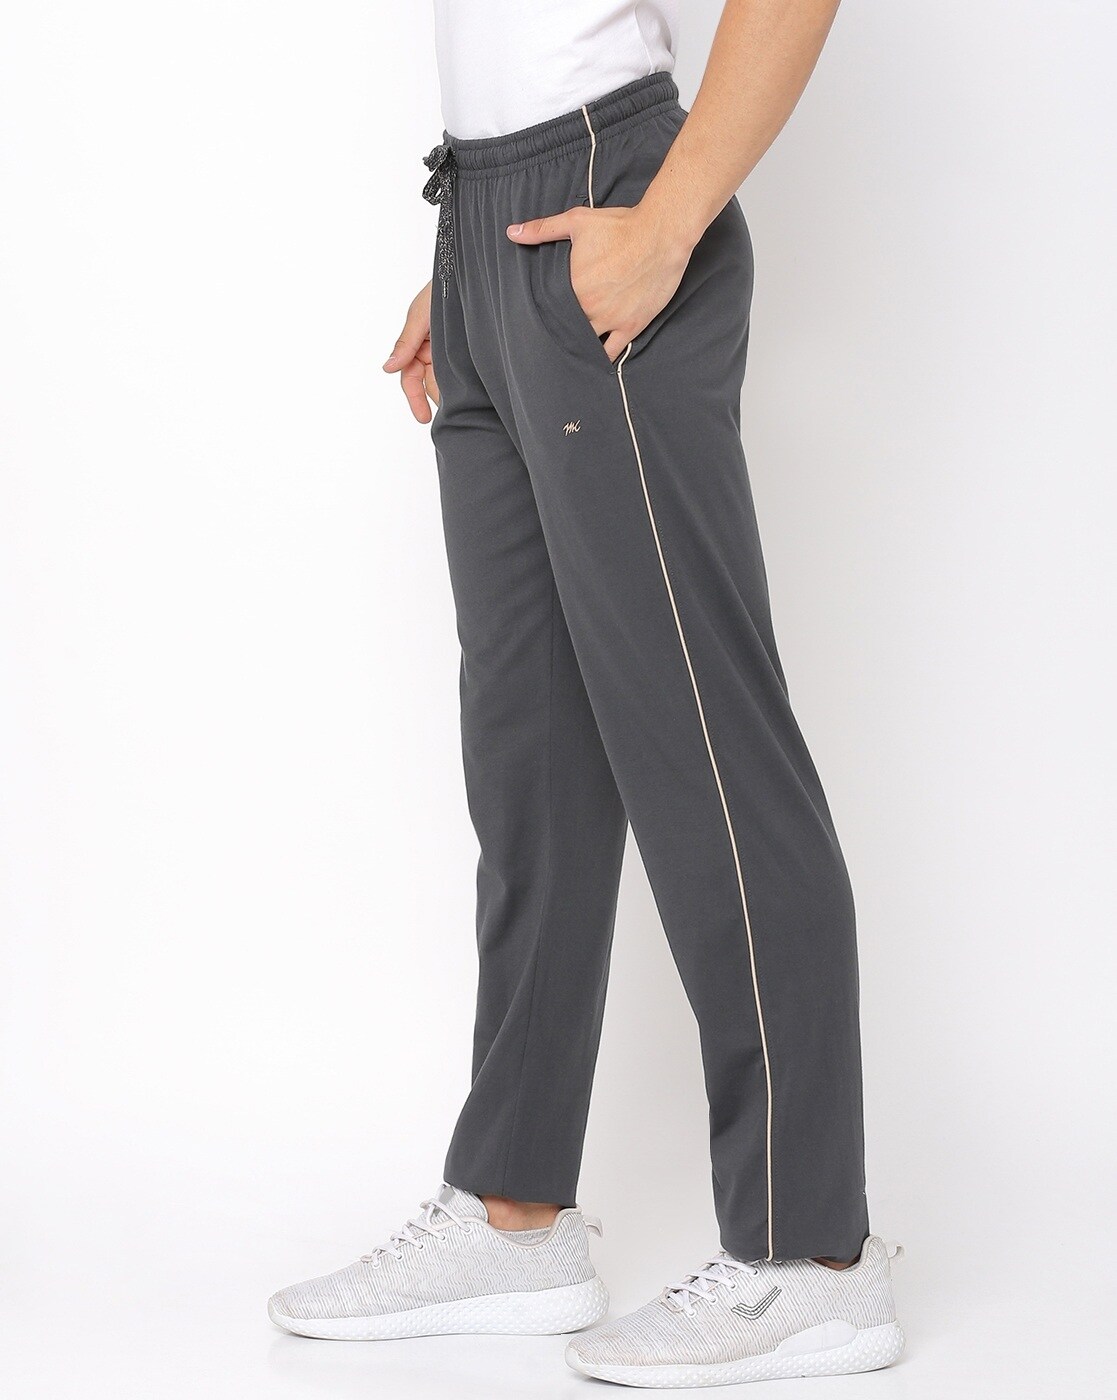 Shop Men's Track Pants - Comfortable and Stylish | Prisma Garments